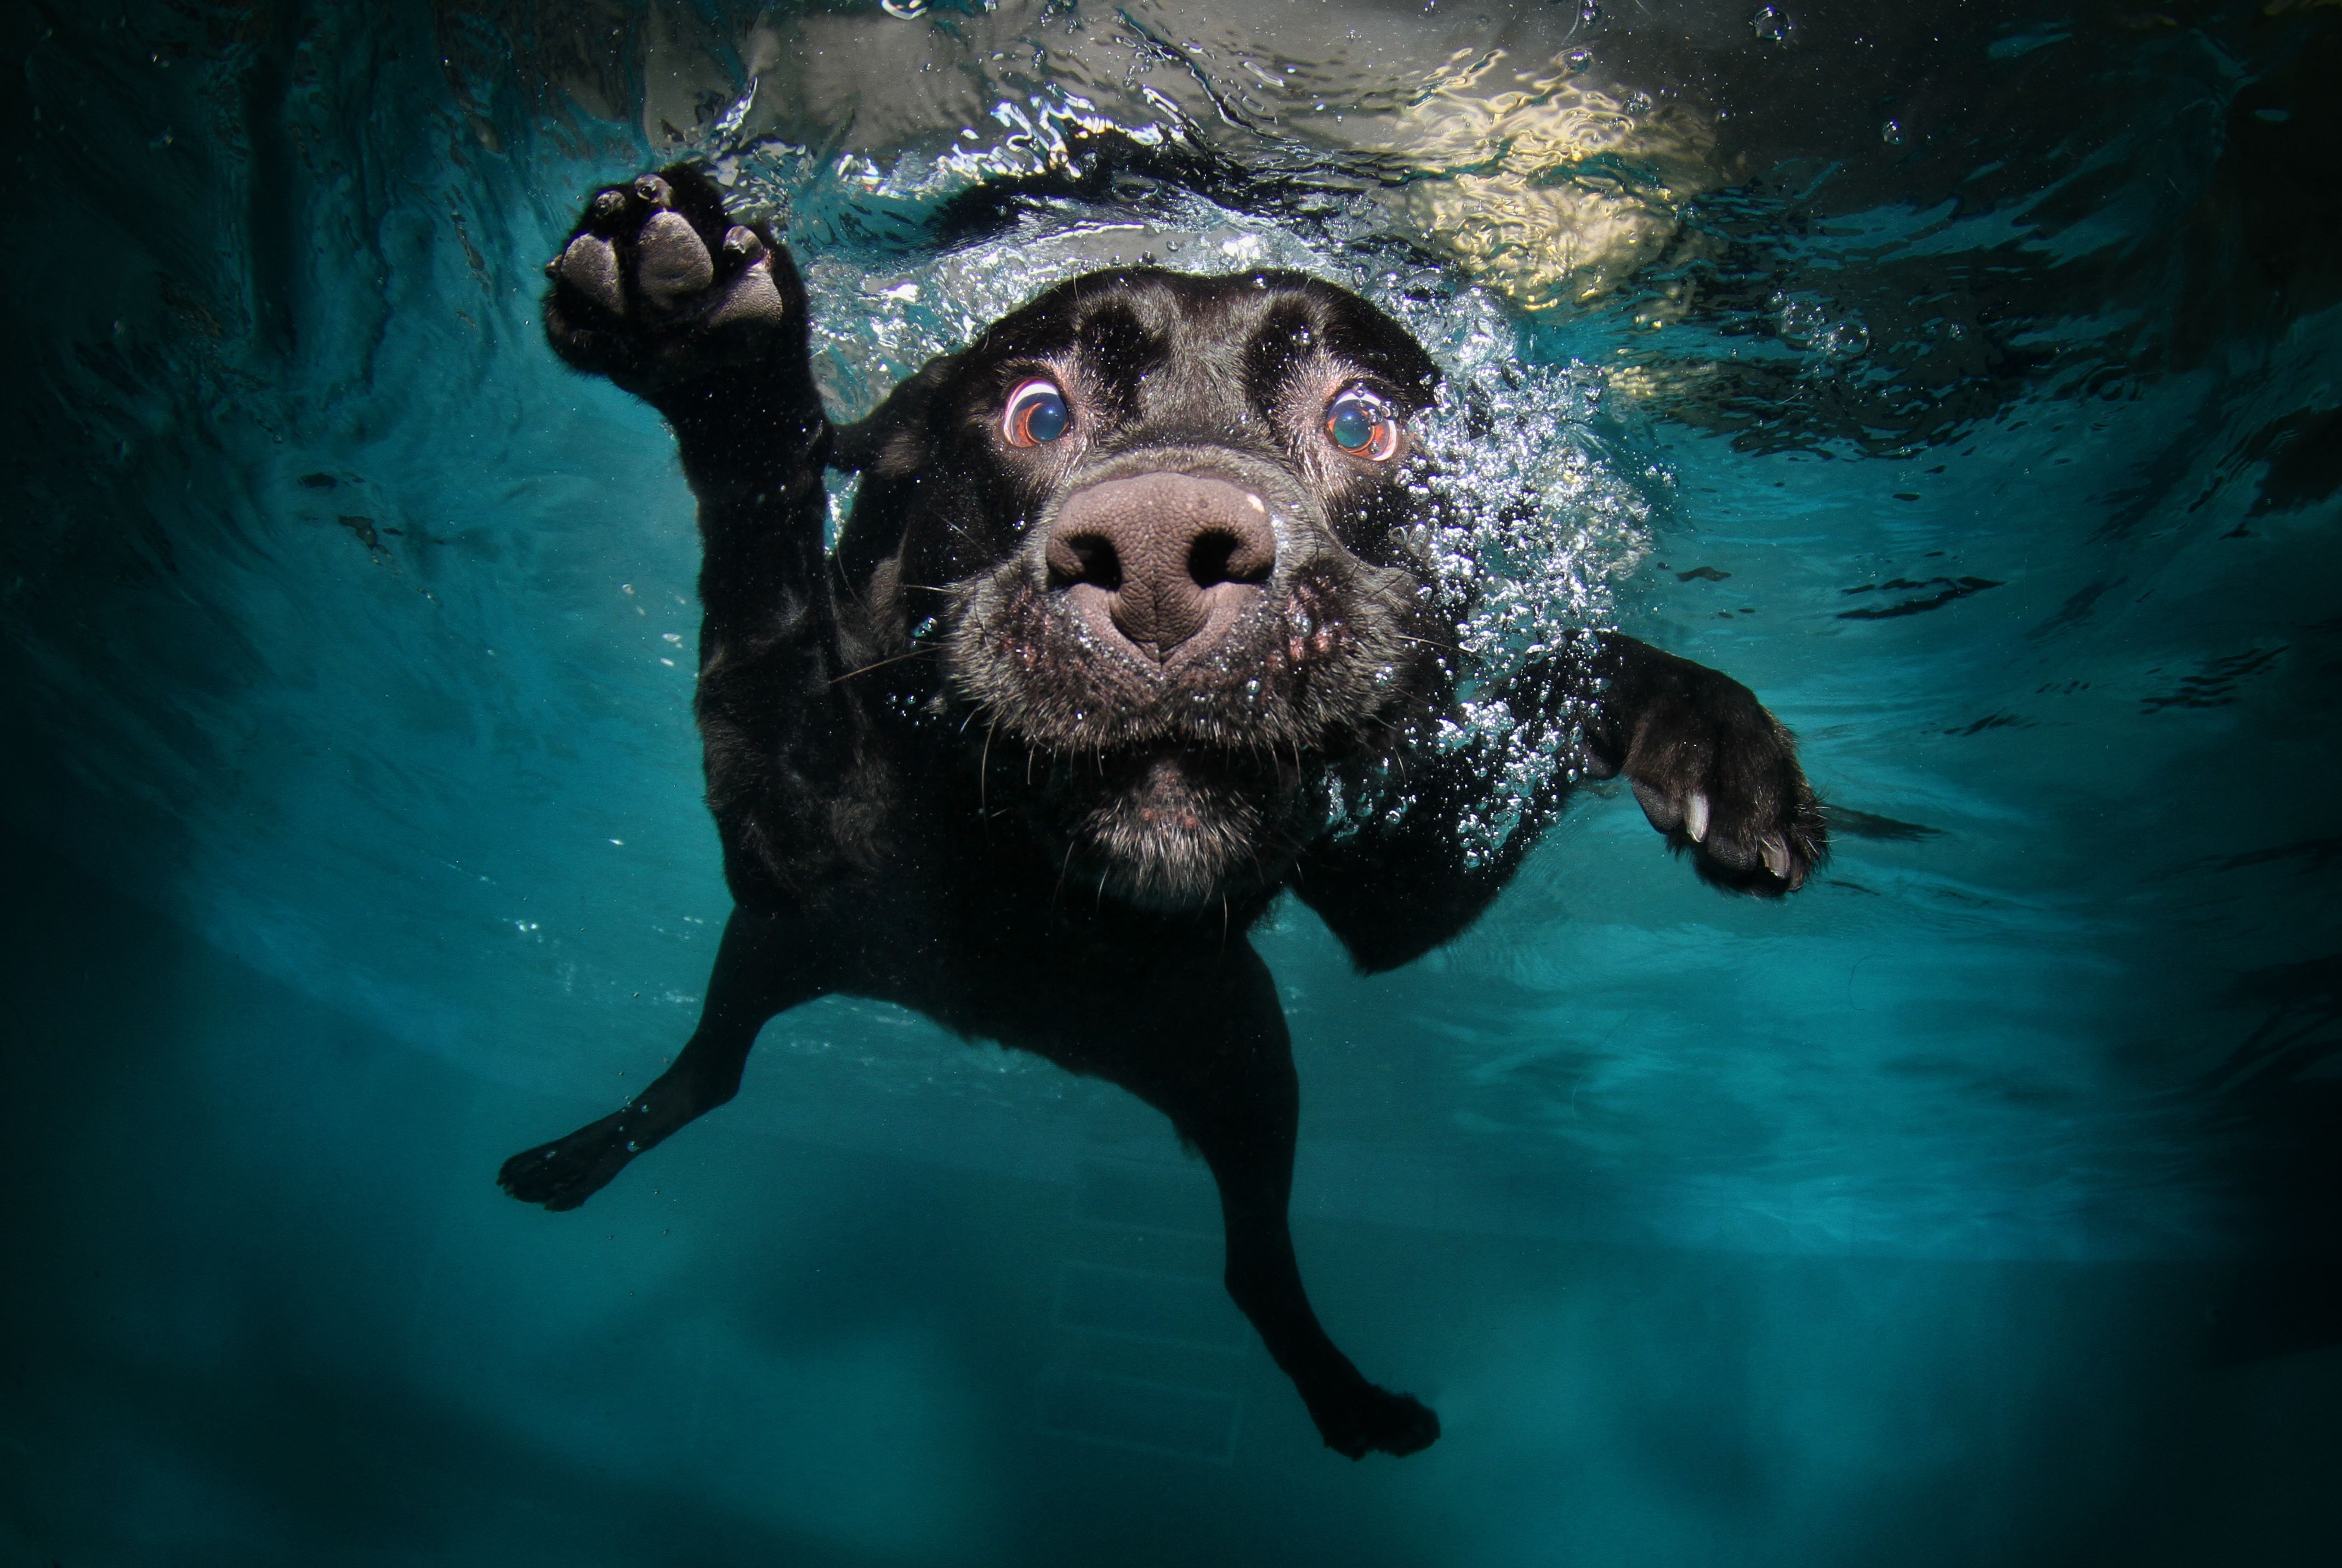 General 4272x2860 dog underwater swimming animals nature water bubbles muzzles legs swimming pool mammals